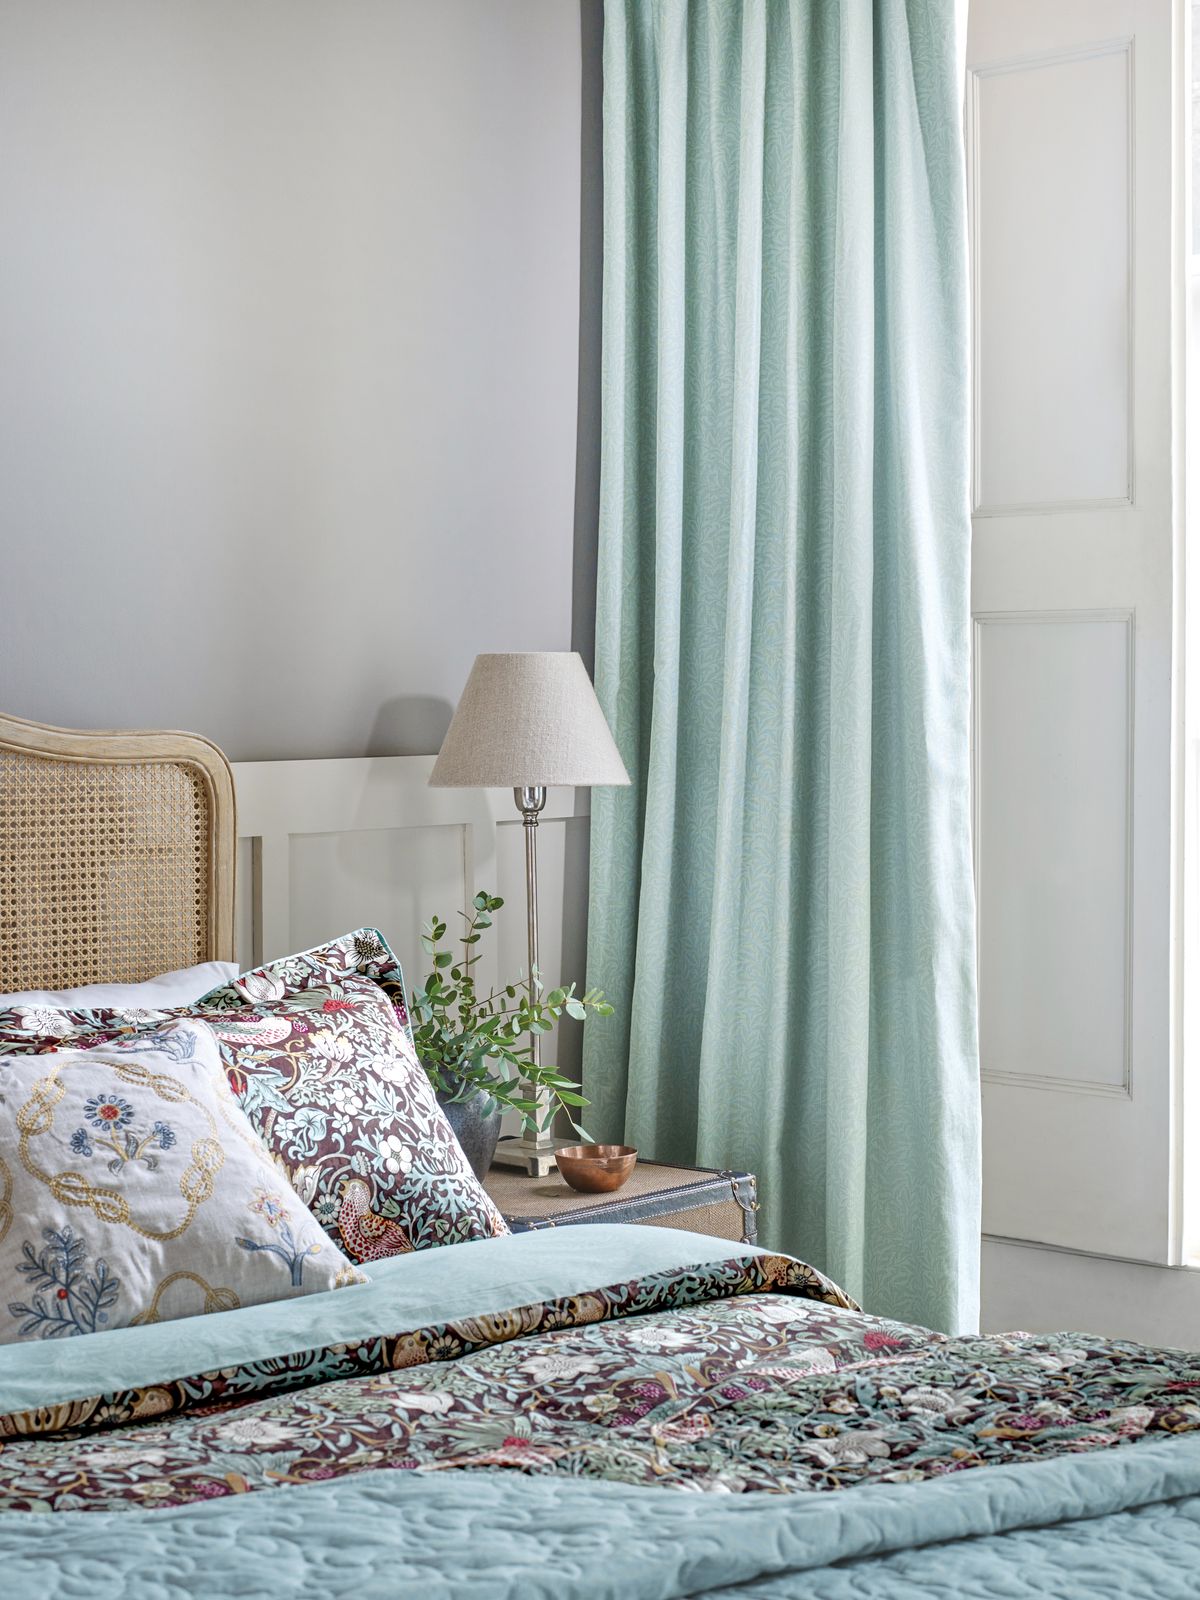 Bedroom Curtain Ideas 16 Curtain Designs For Beautiful